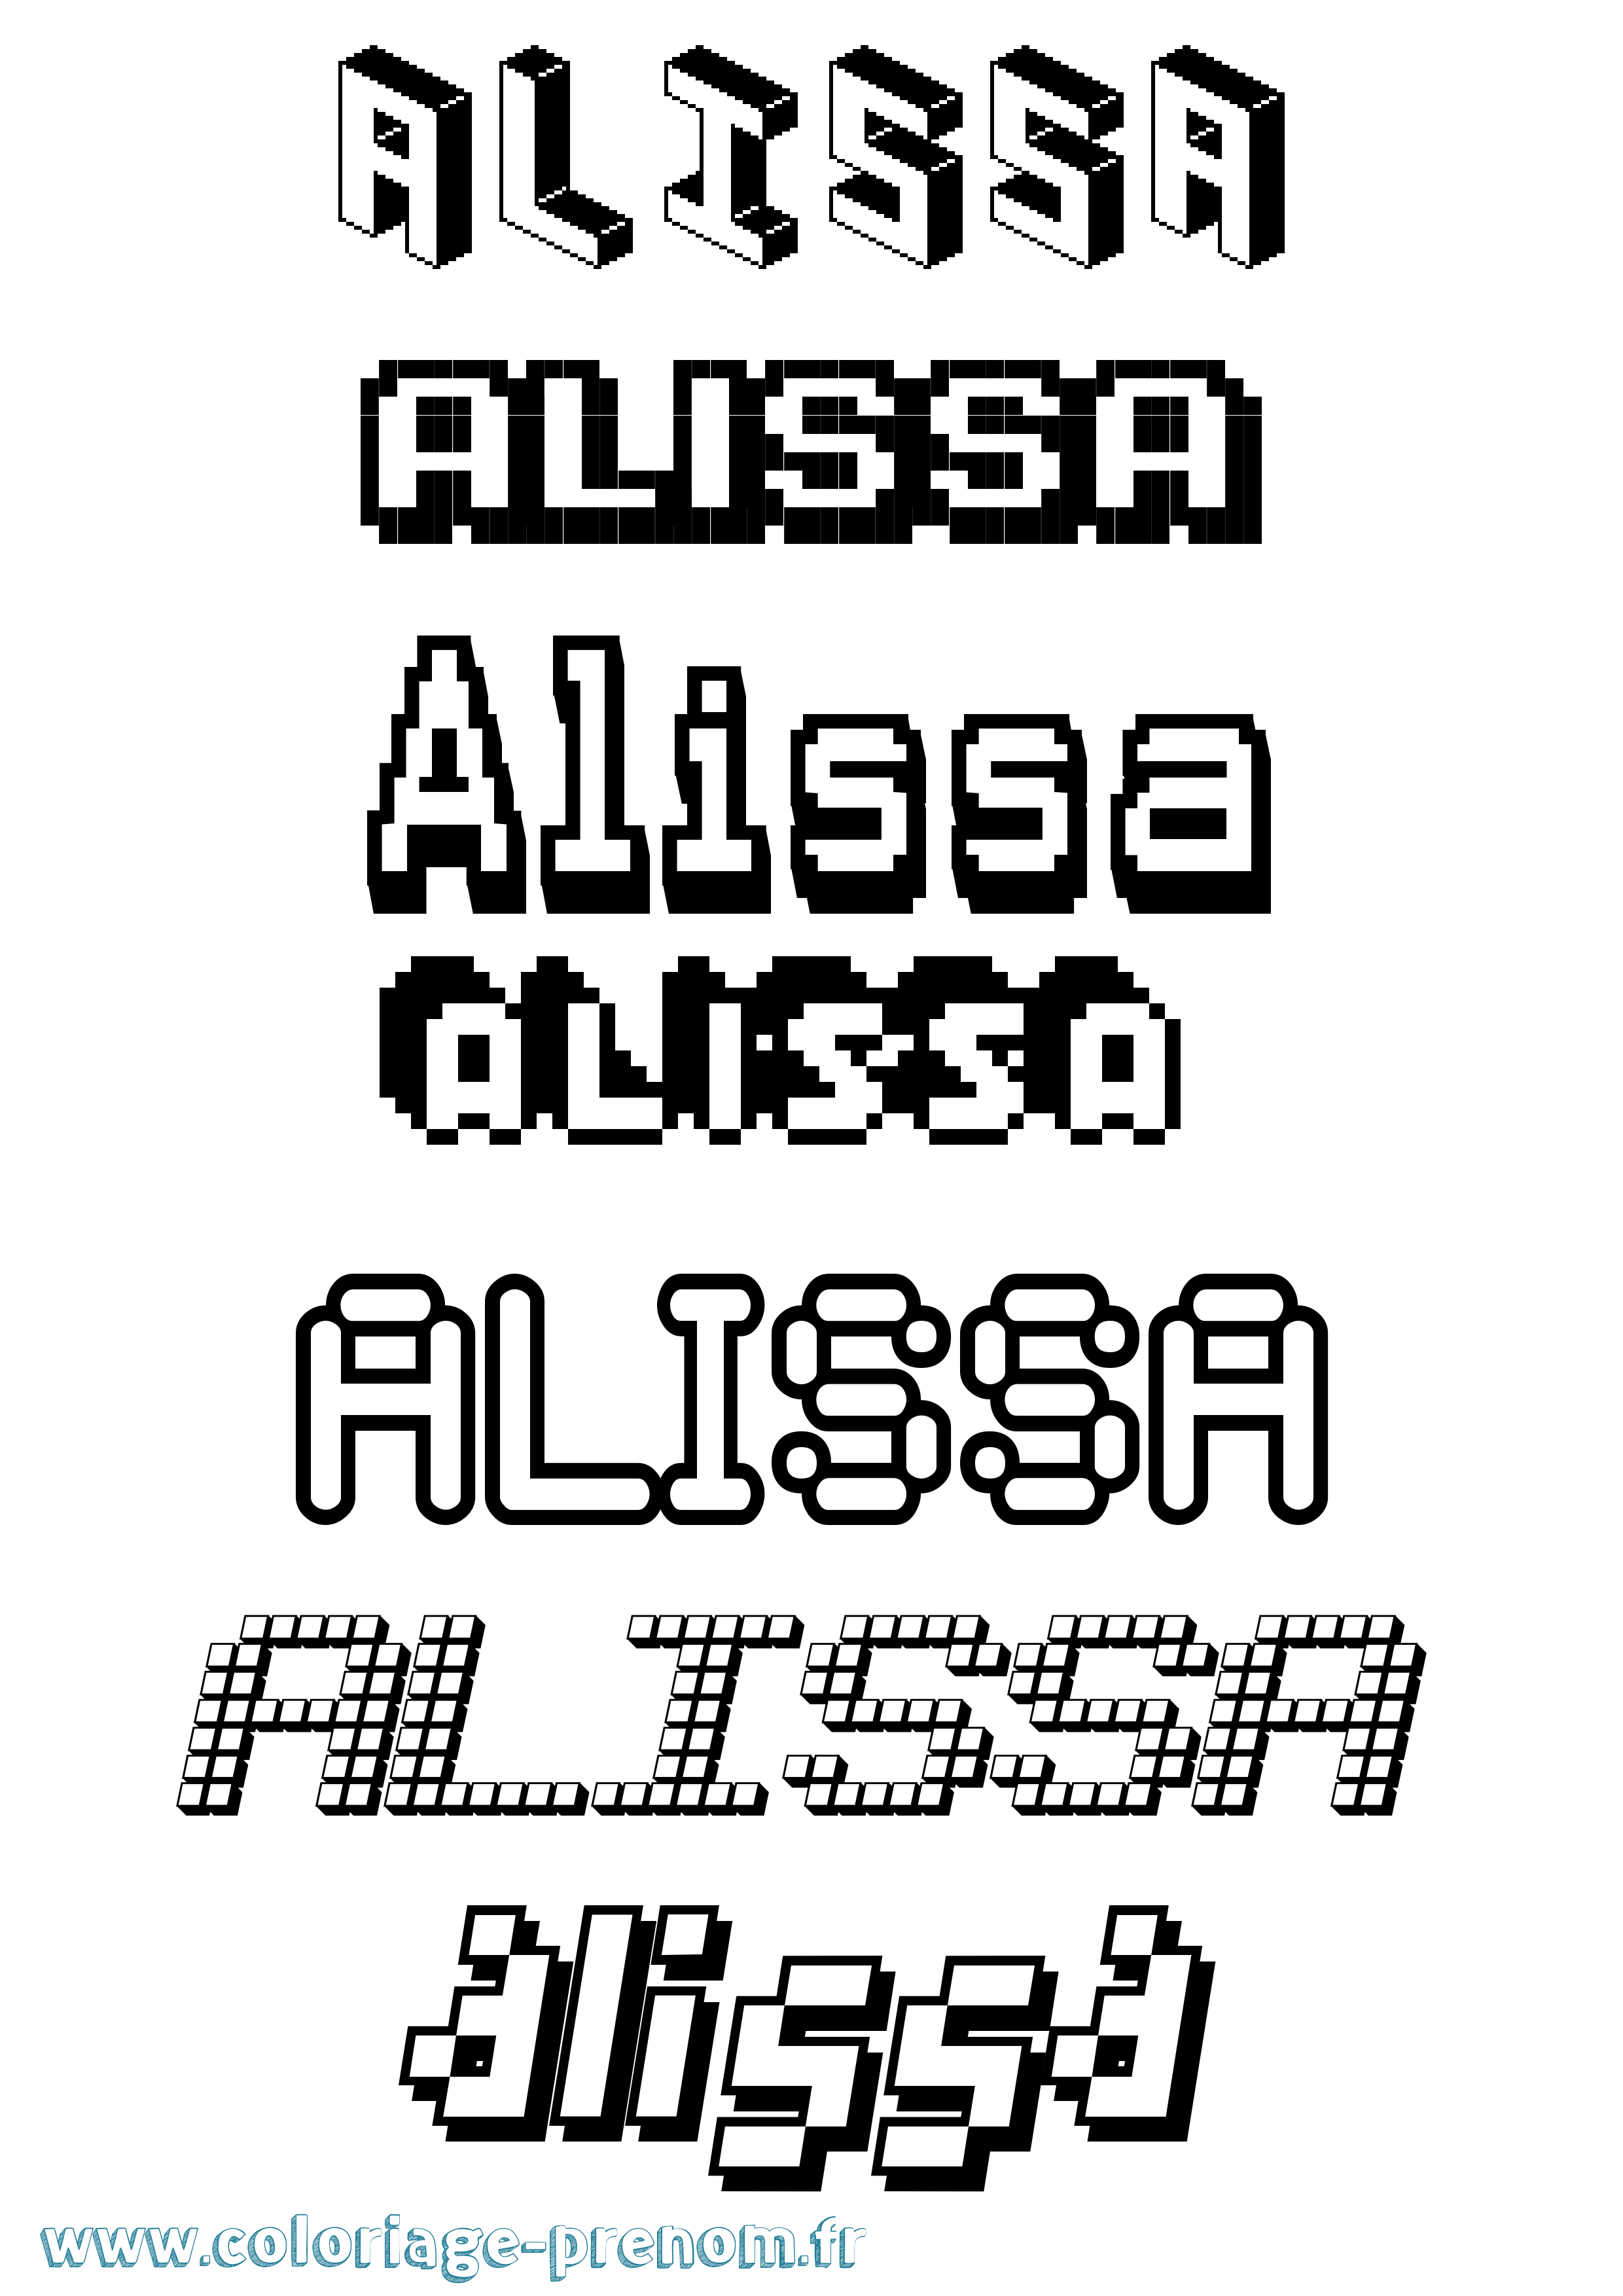 Coloriage prénom Alissa Pixel